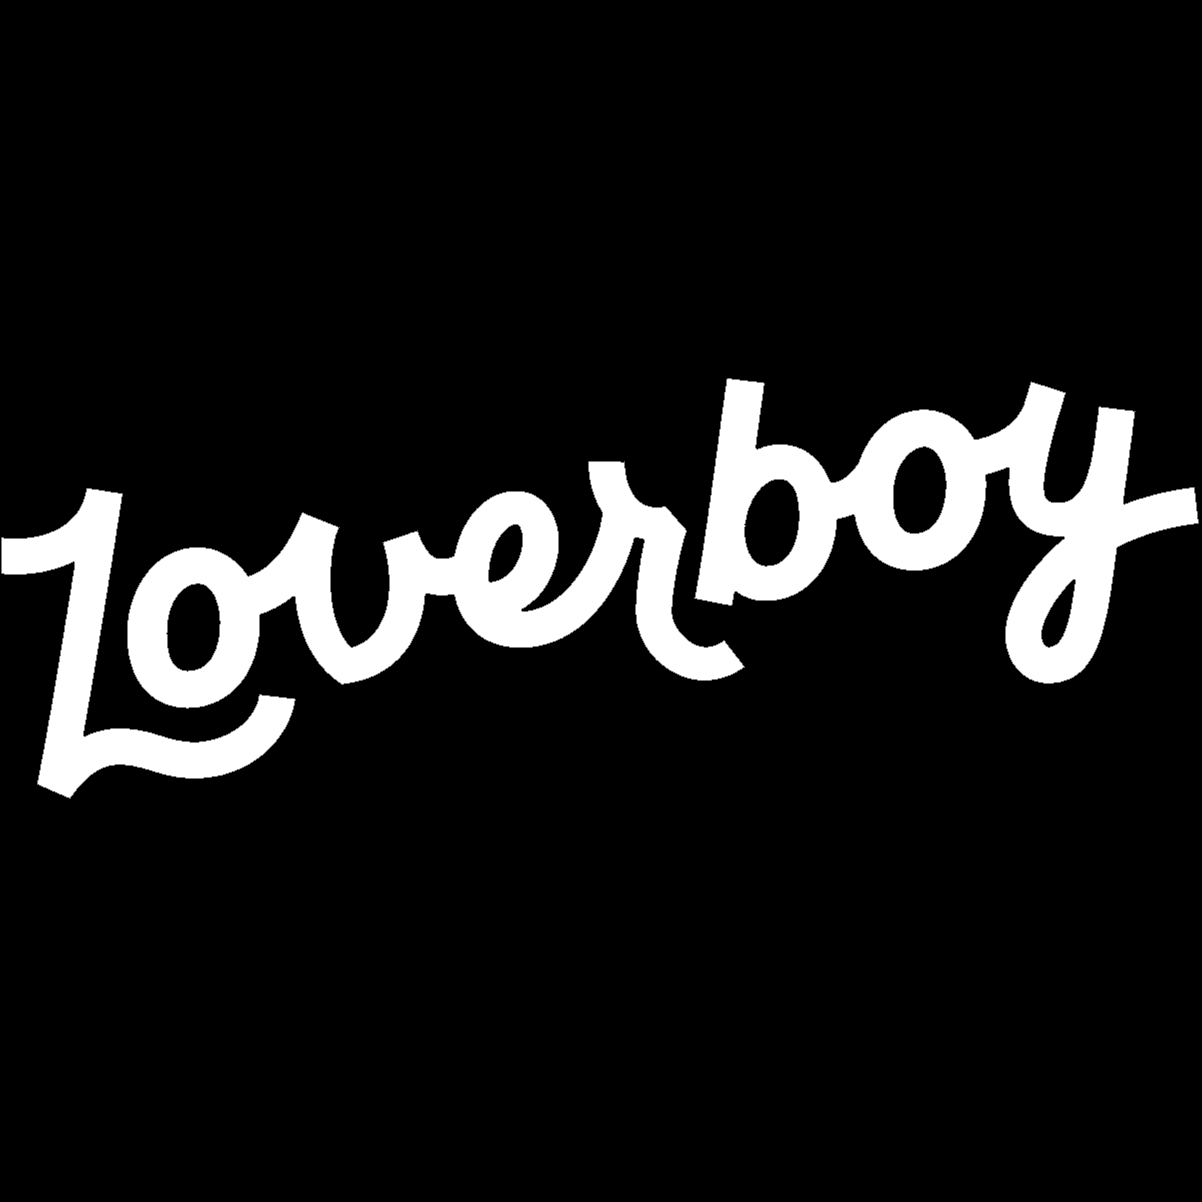 Loverboy logo